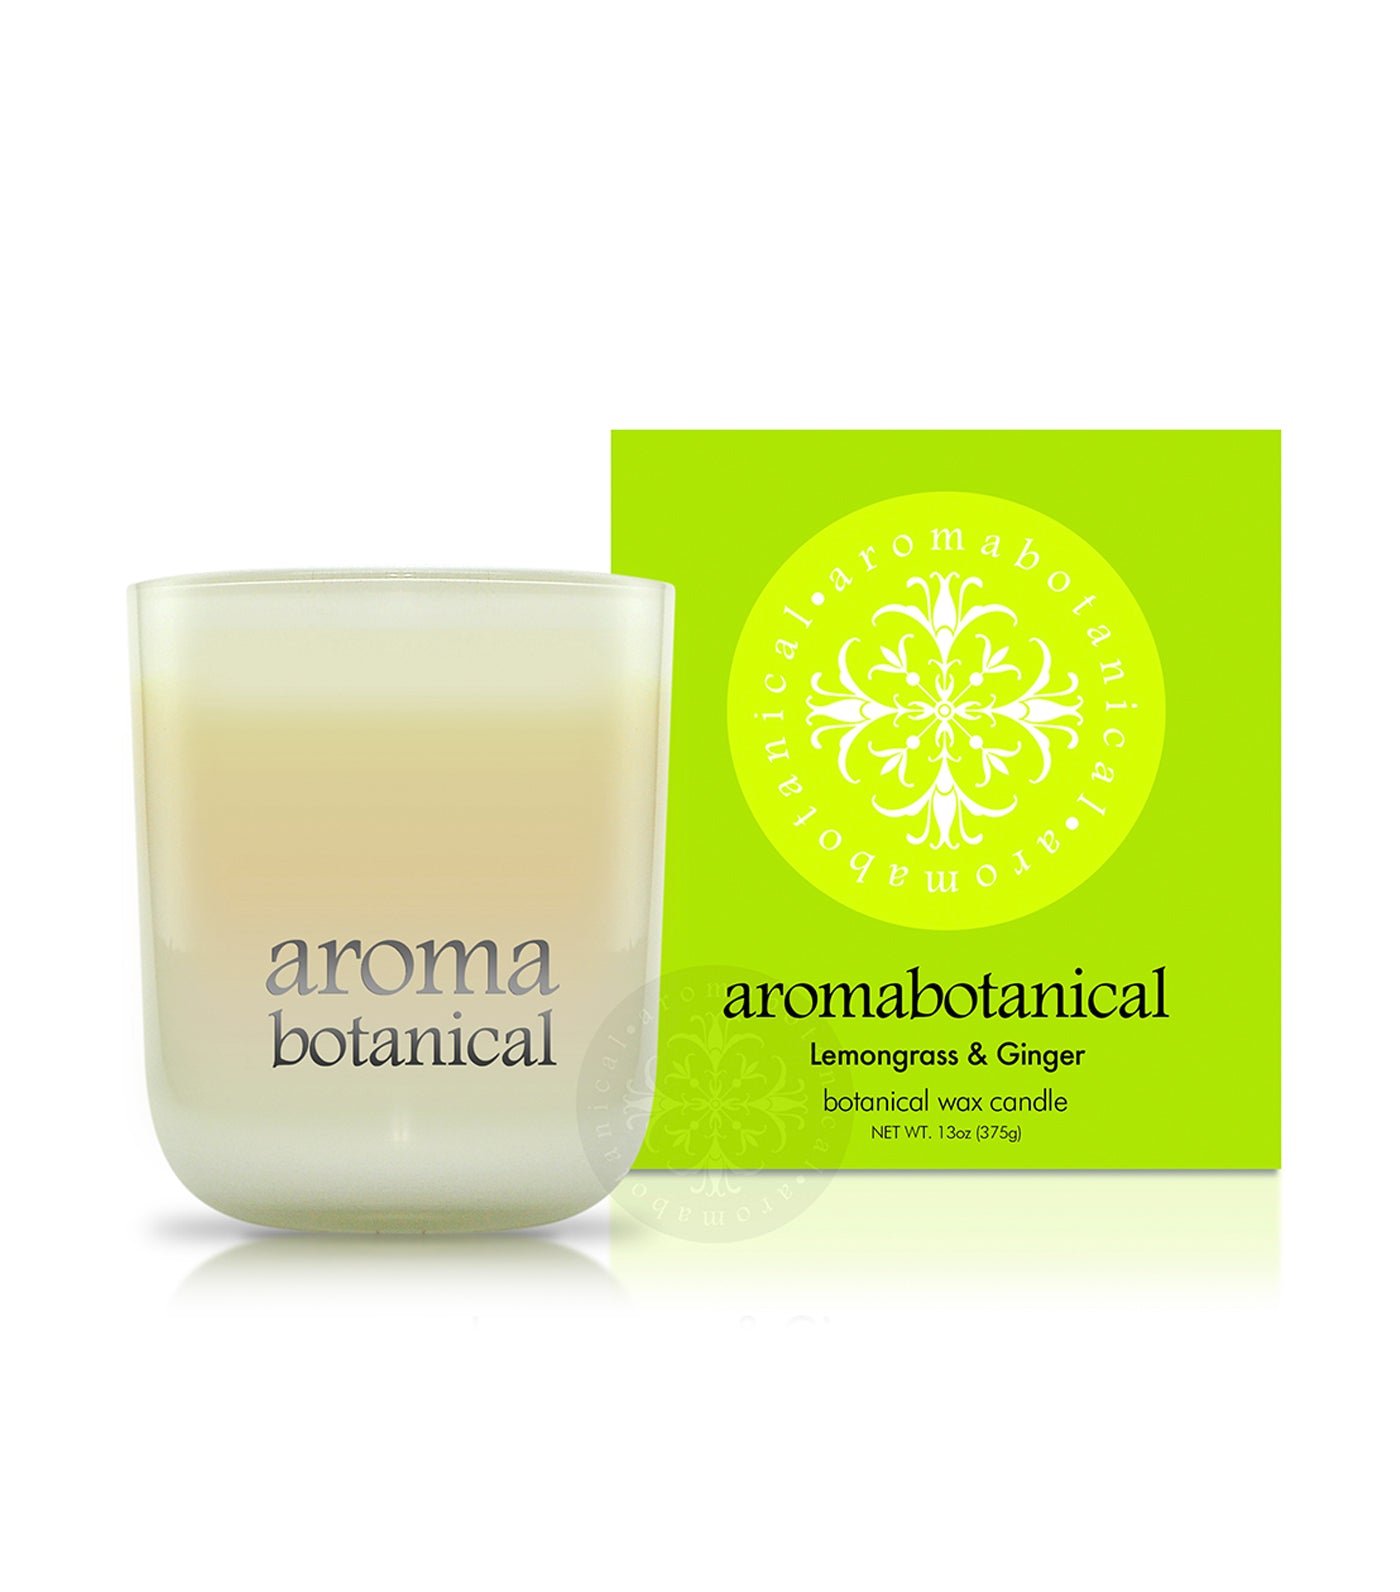 aromabotanical lemongrass & ginger 375g candle